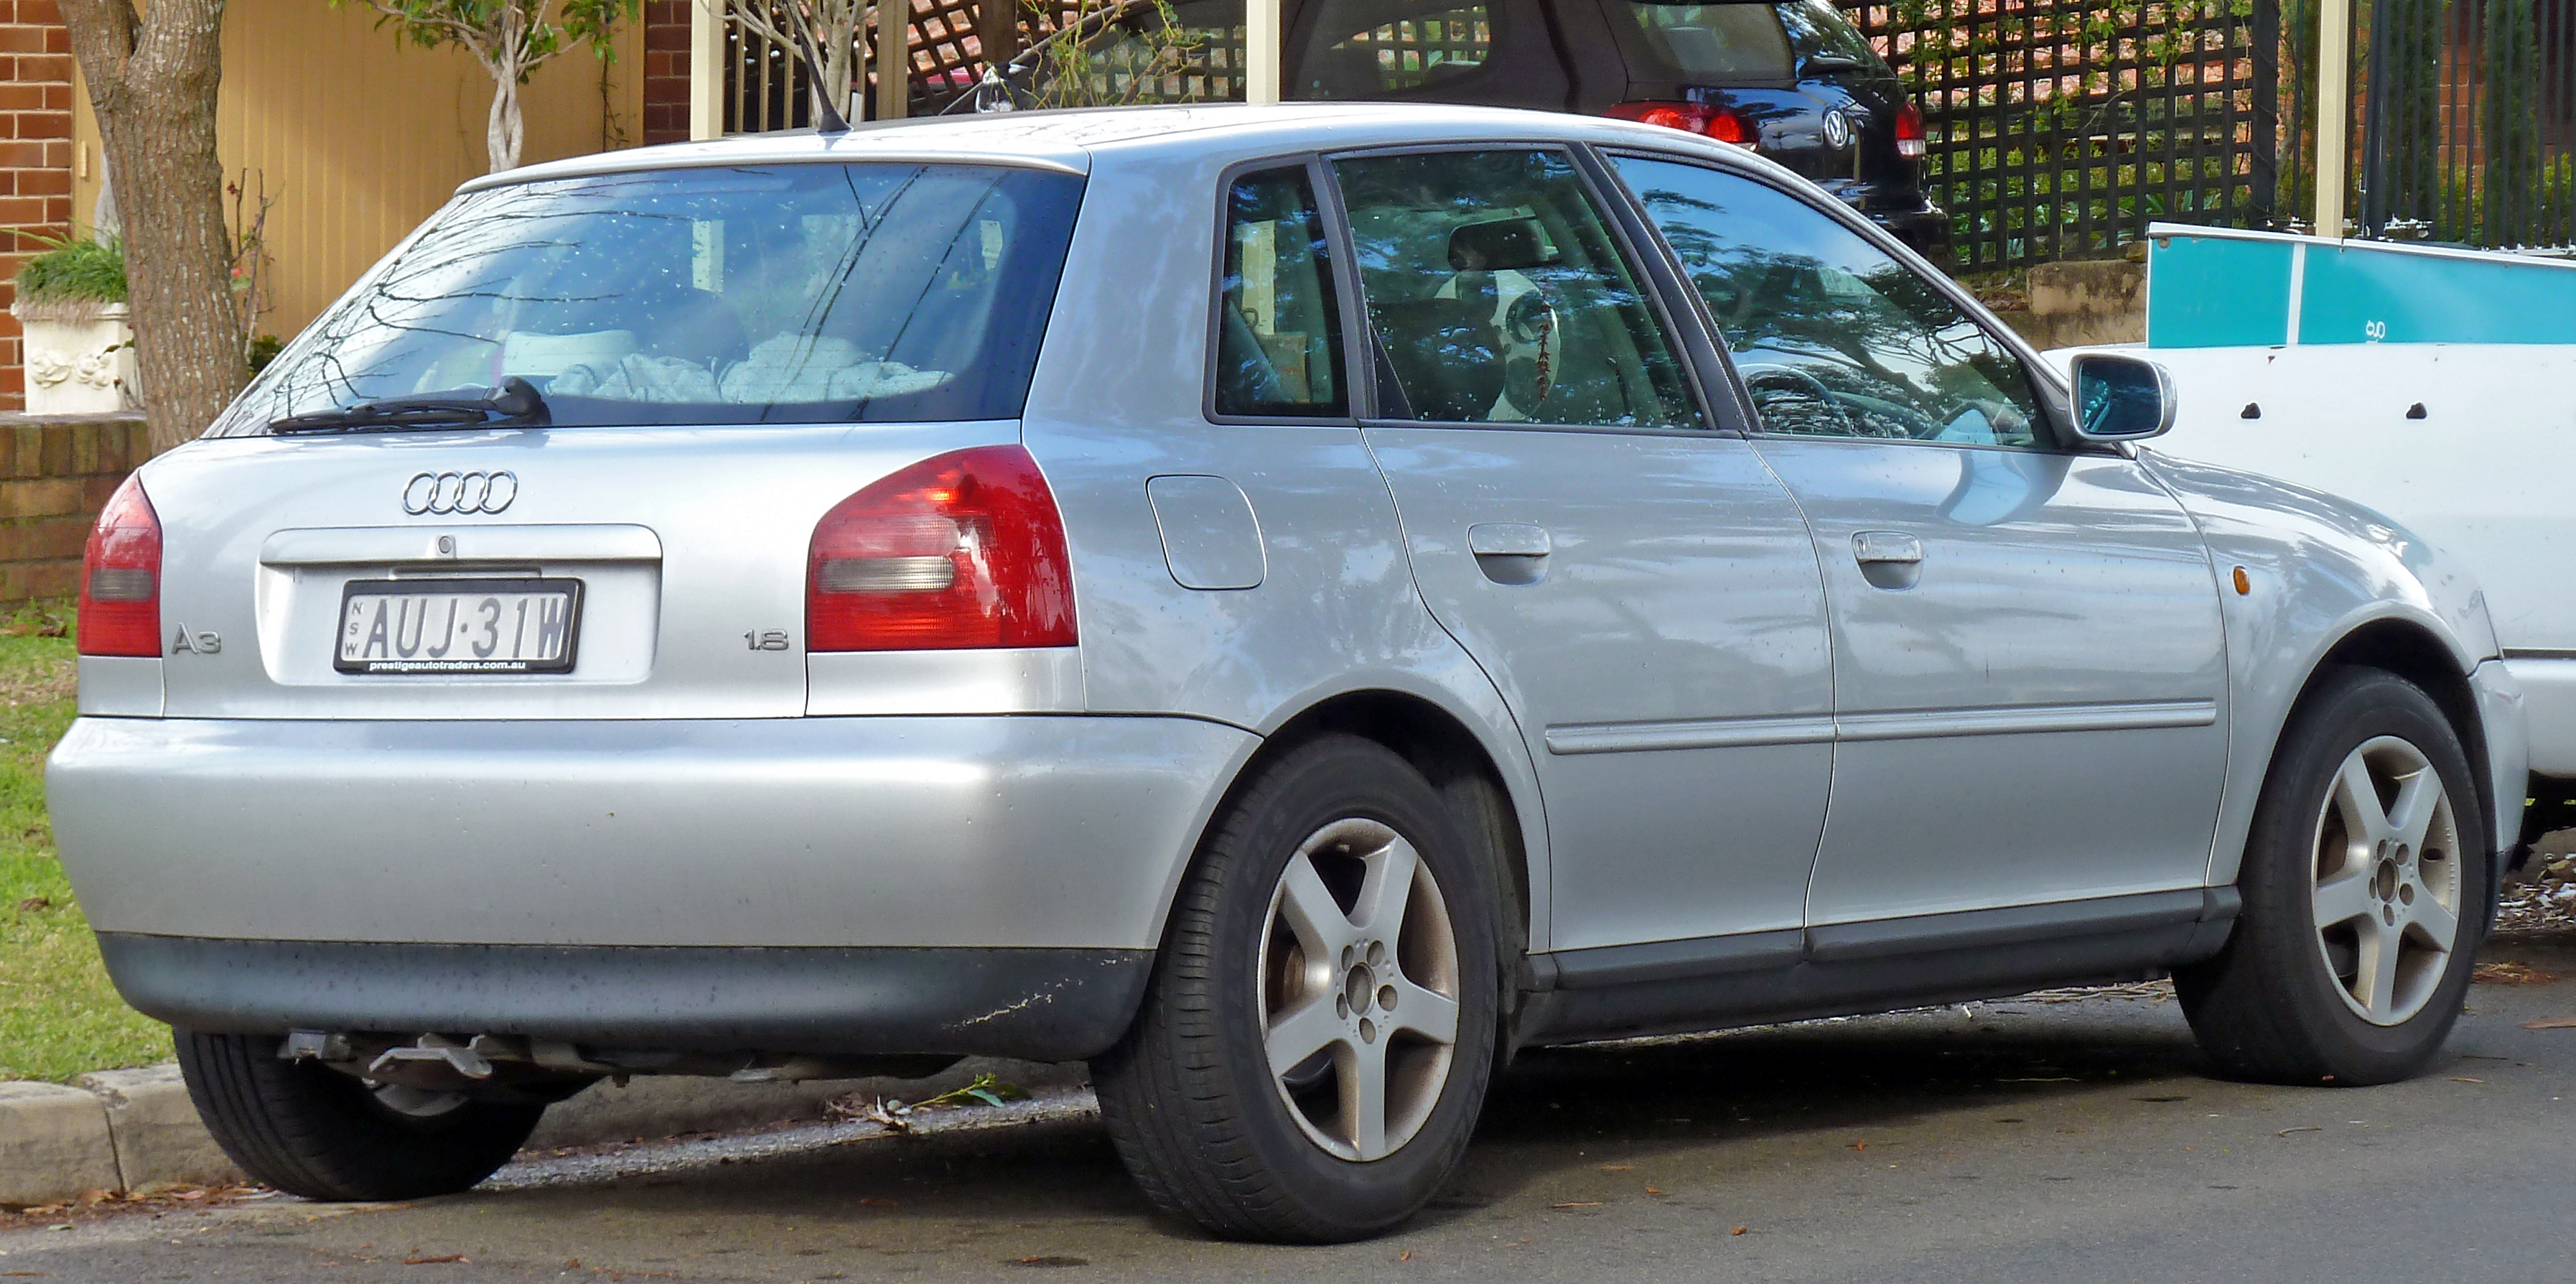 File:1999-2000 Audi A3 (8L) 1.8 5-door hatchback 01.jpg - Wikipedia